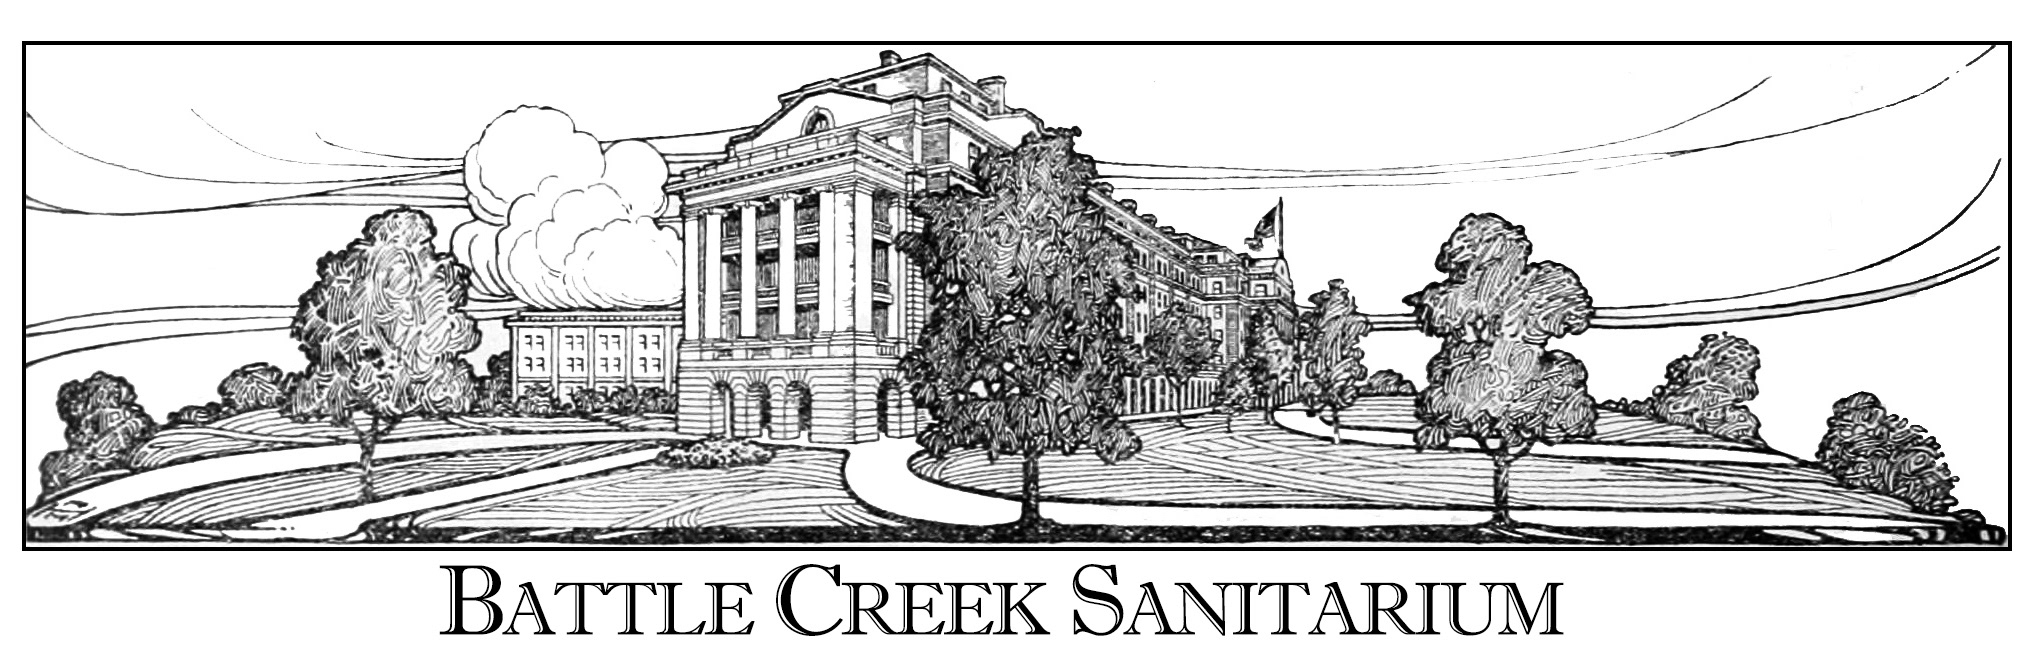 Royalty-Free Stock Images of The Battle Creek Sanitarium